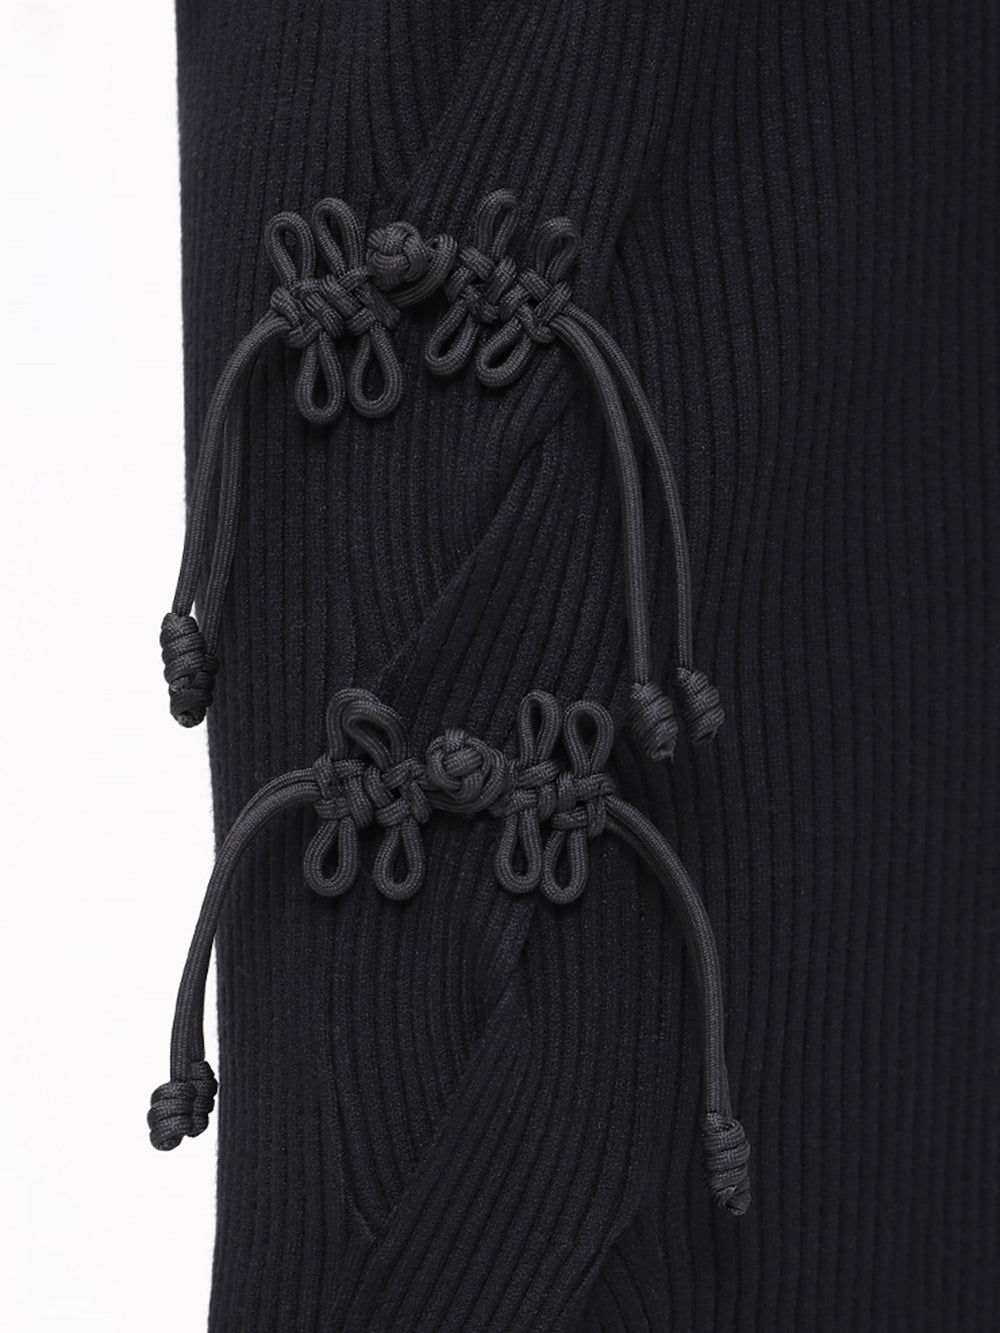 MUKTANK×CUUDICLAB Knit Frog Button Midi Skirts